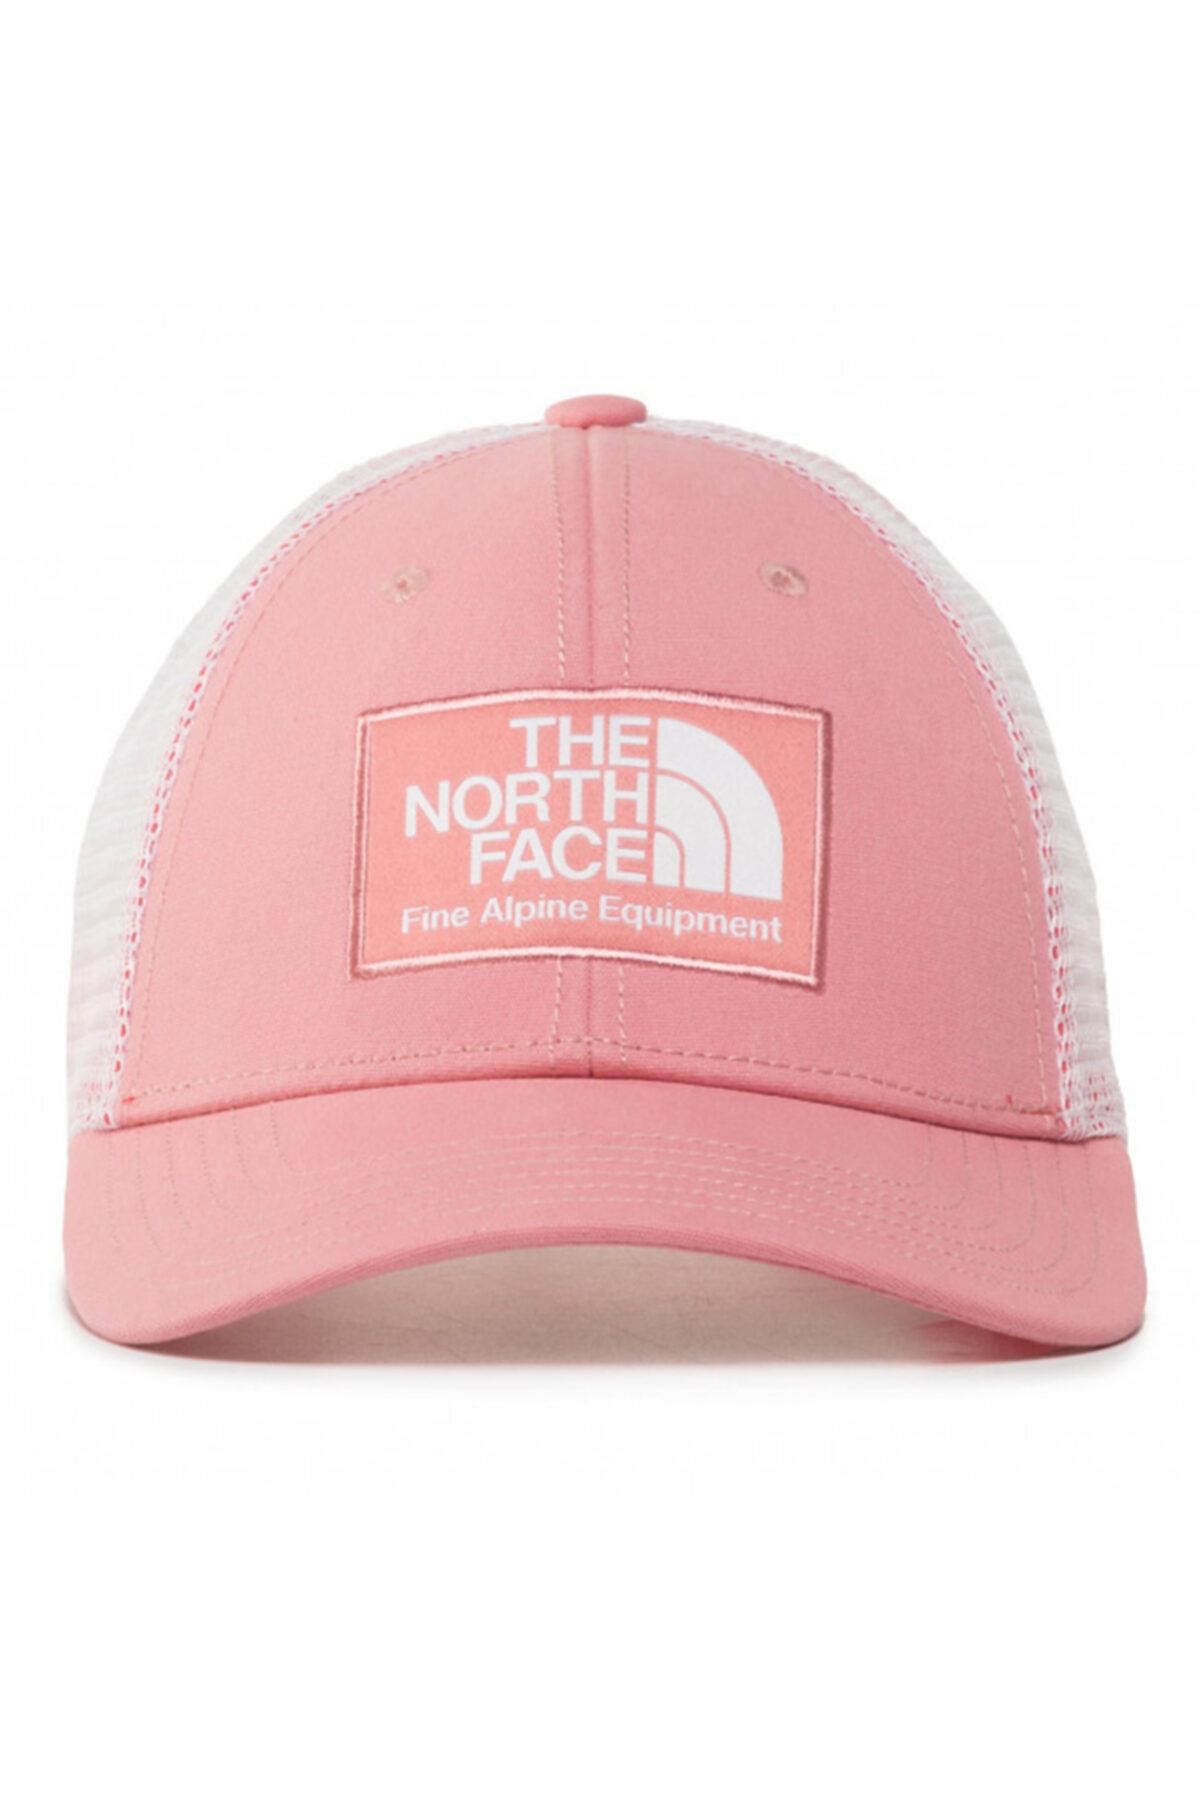 The North Face Mudder Kadın Şapka